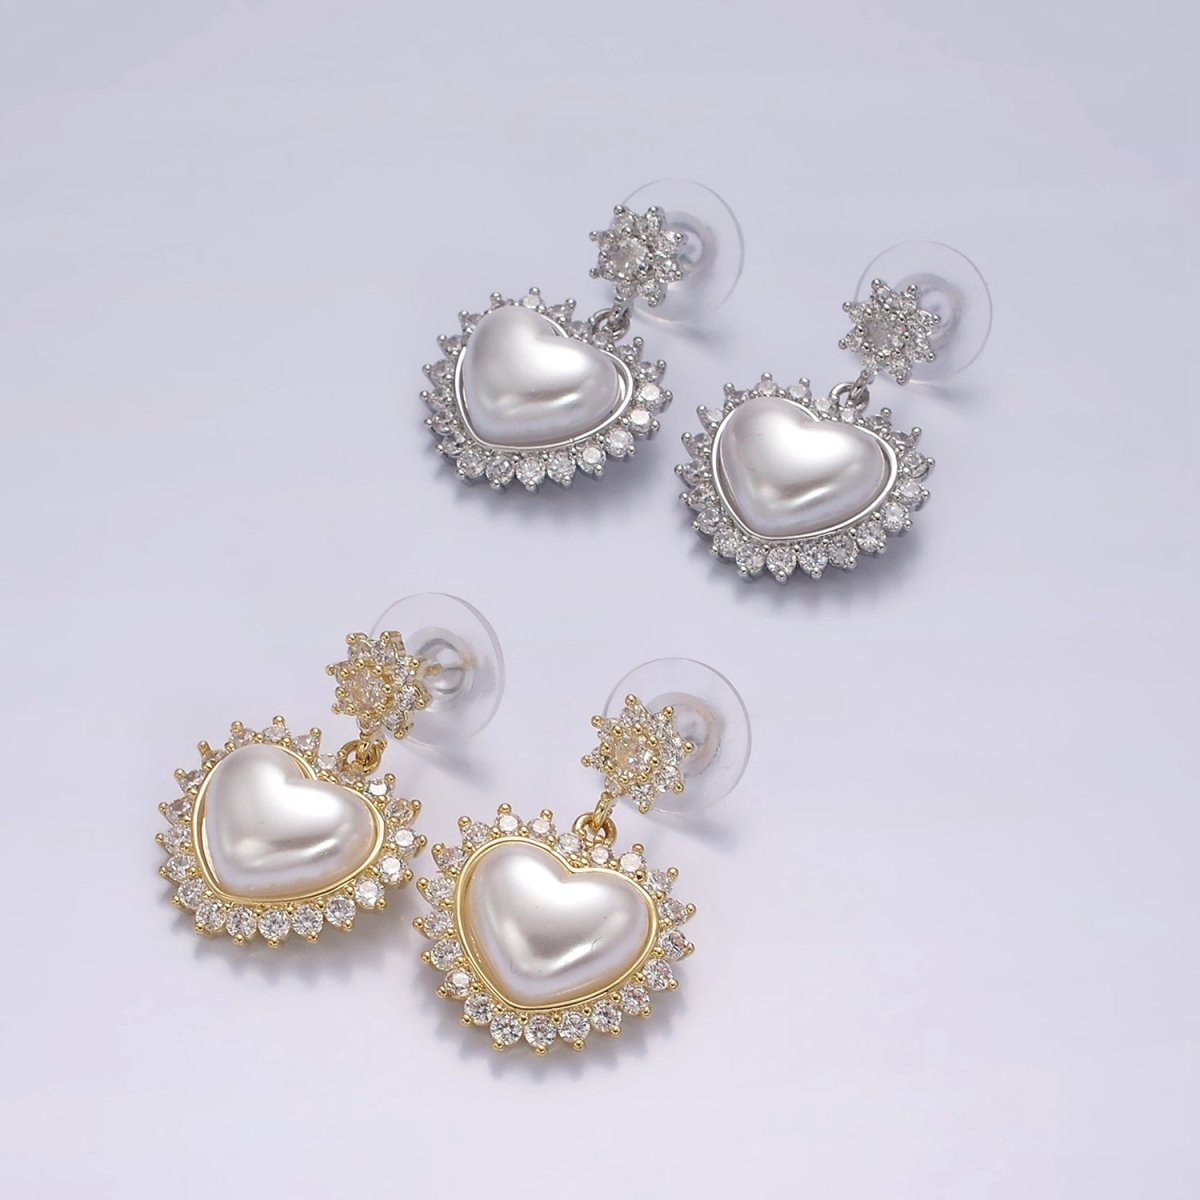 14K Gold Filled Flower CZ Heart Shell Pearl Drop Stud Earrings in Gold & Silver | AE317 AE318 - DLUXCA